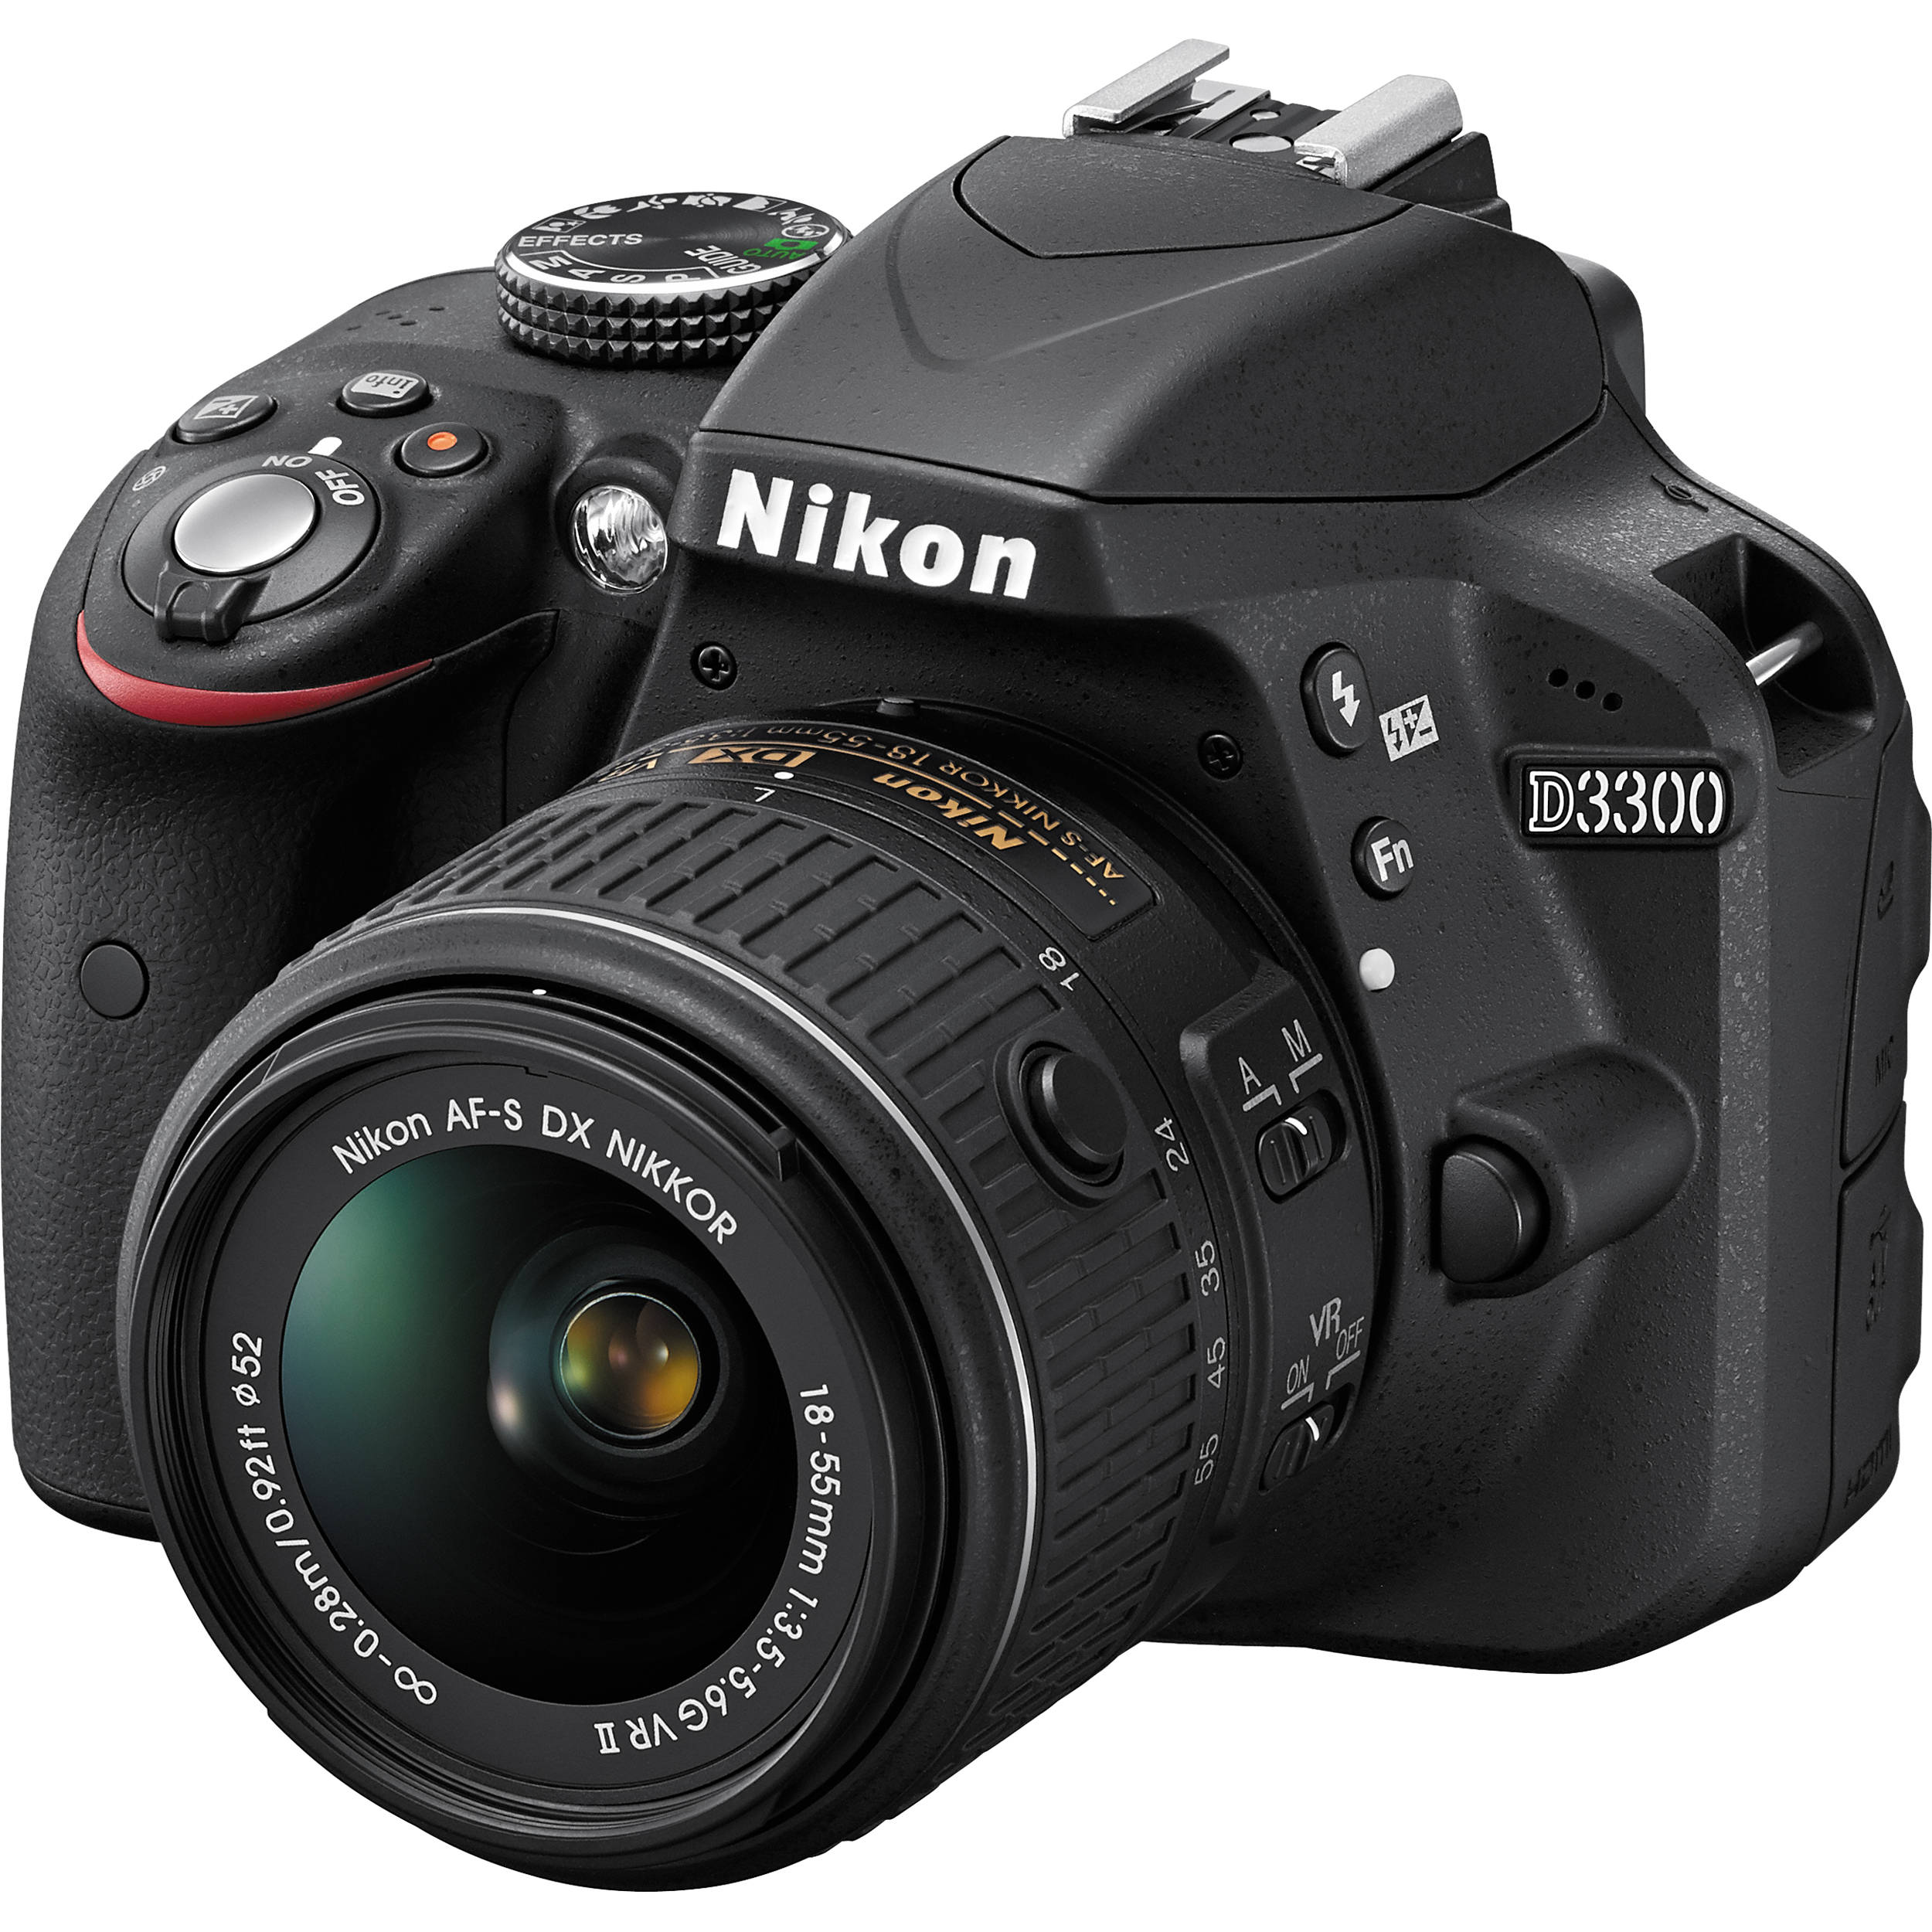 Used Nikon D3300 DSLR Camera with 18-55mm Lens (Black) 1532 B&H